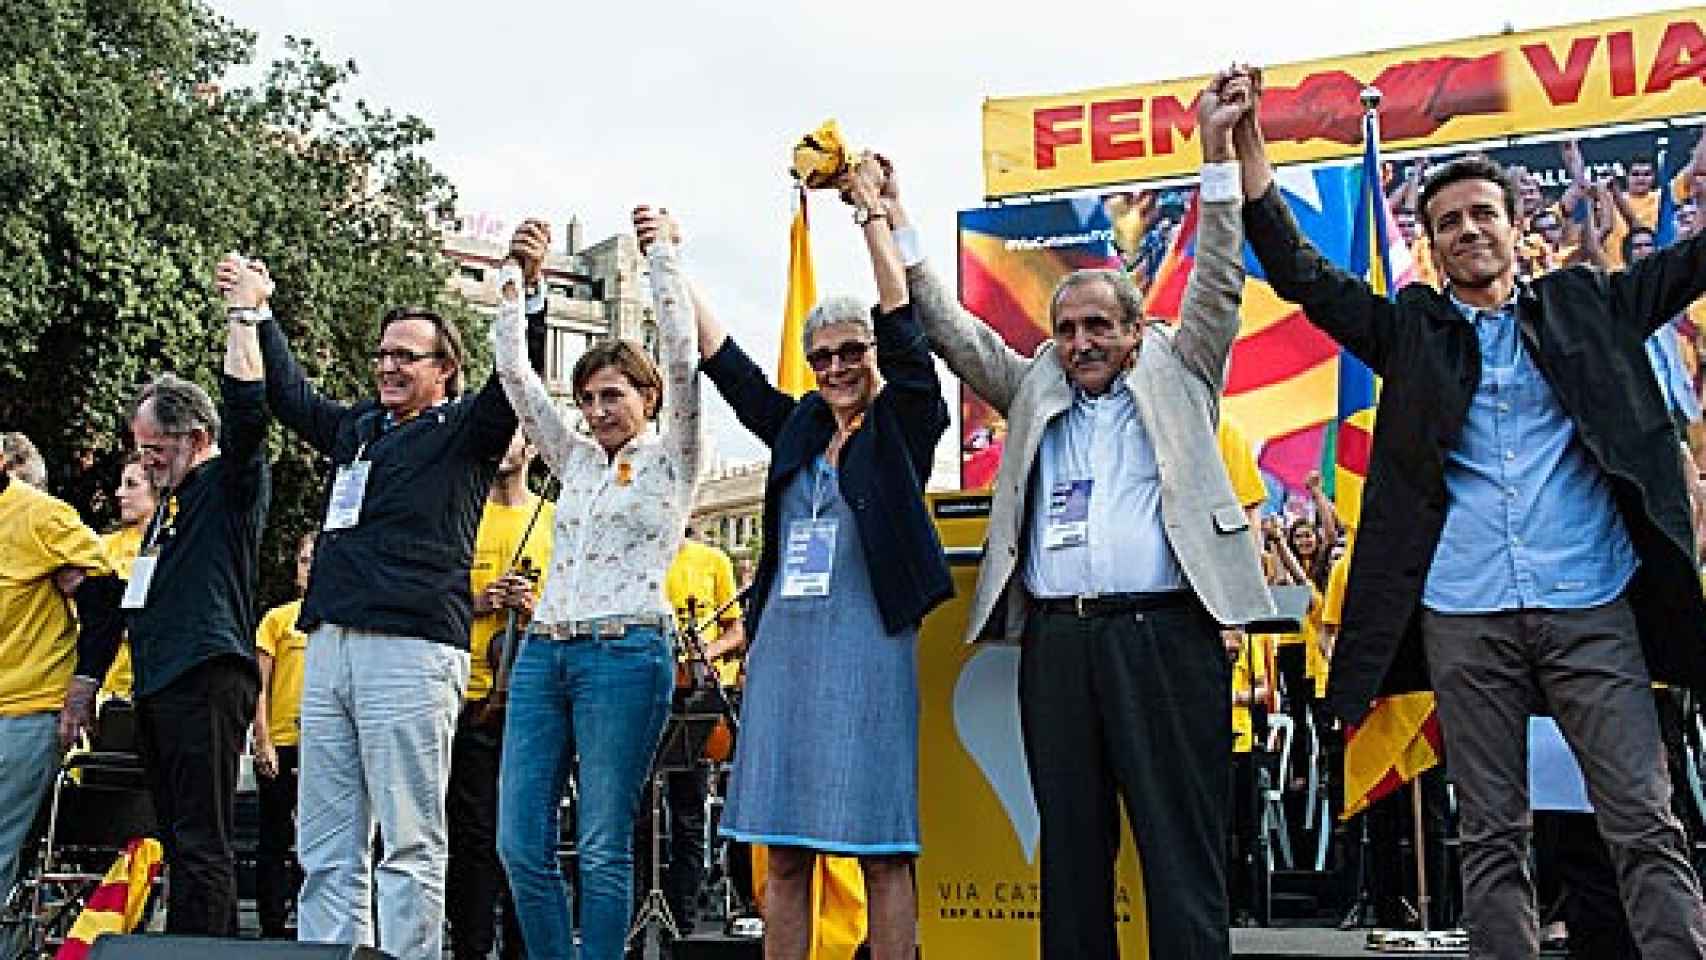 La presidenta de la Assemblea Nacional Catalana (ANC), Carme Forcadell, y la presidenta de Òmnium Cultural, Muriel Casals, durante la Via Catalana per la Independència celebrada la pasada Diada